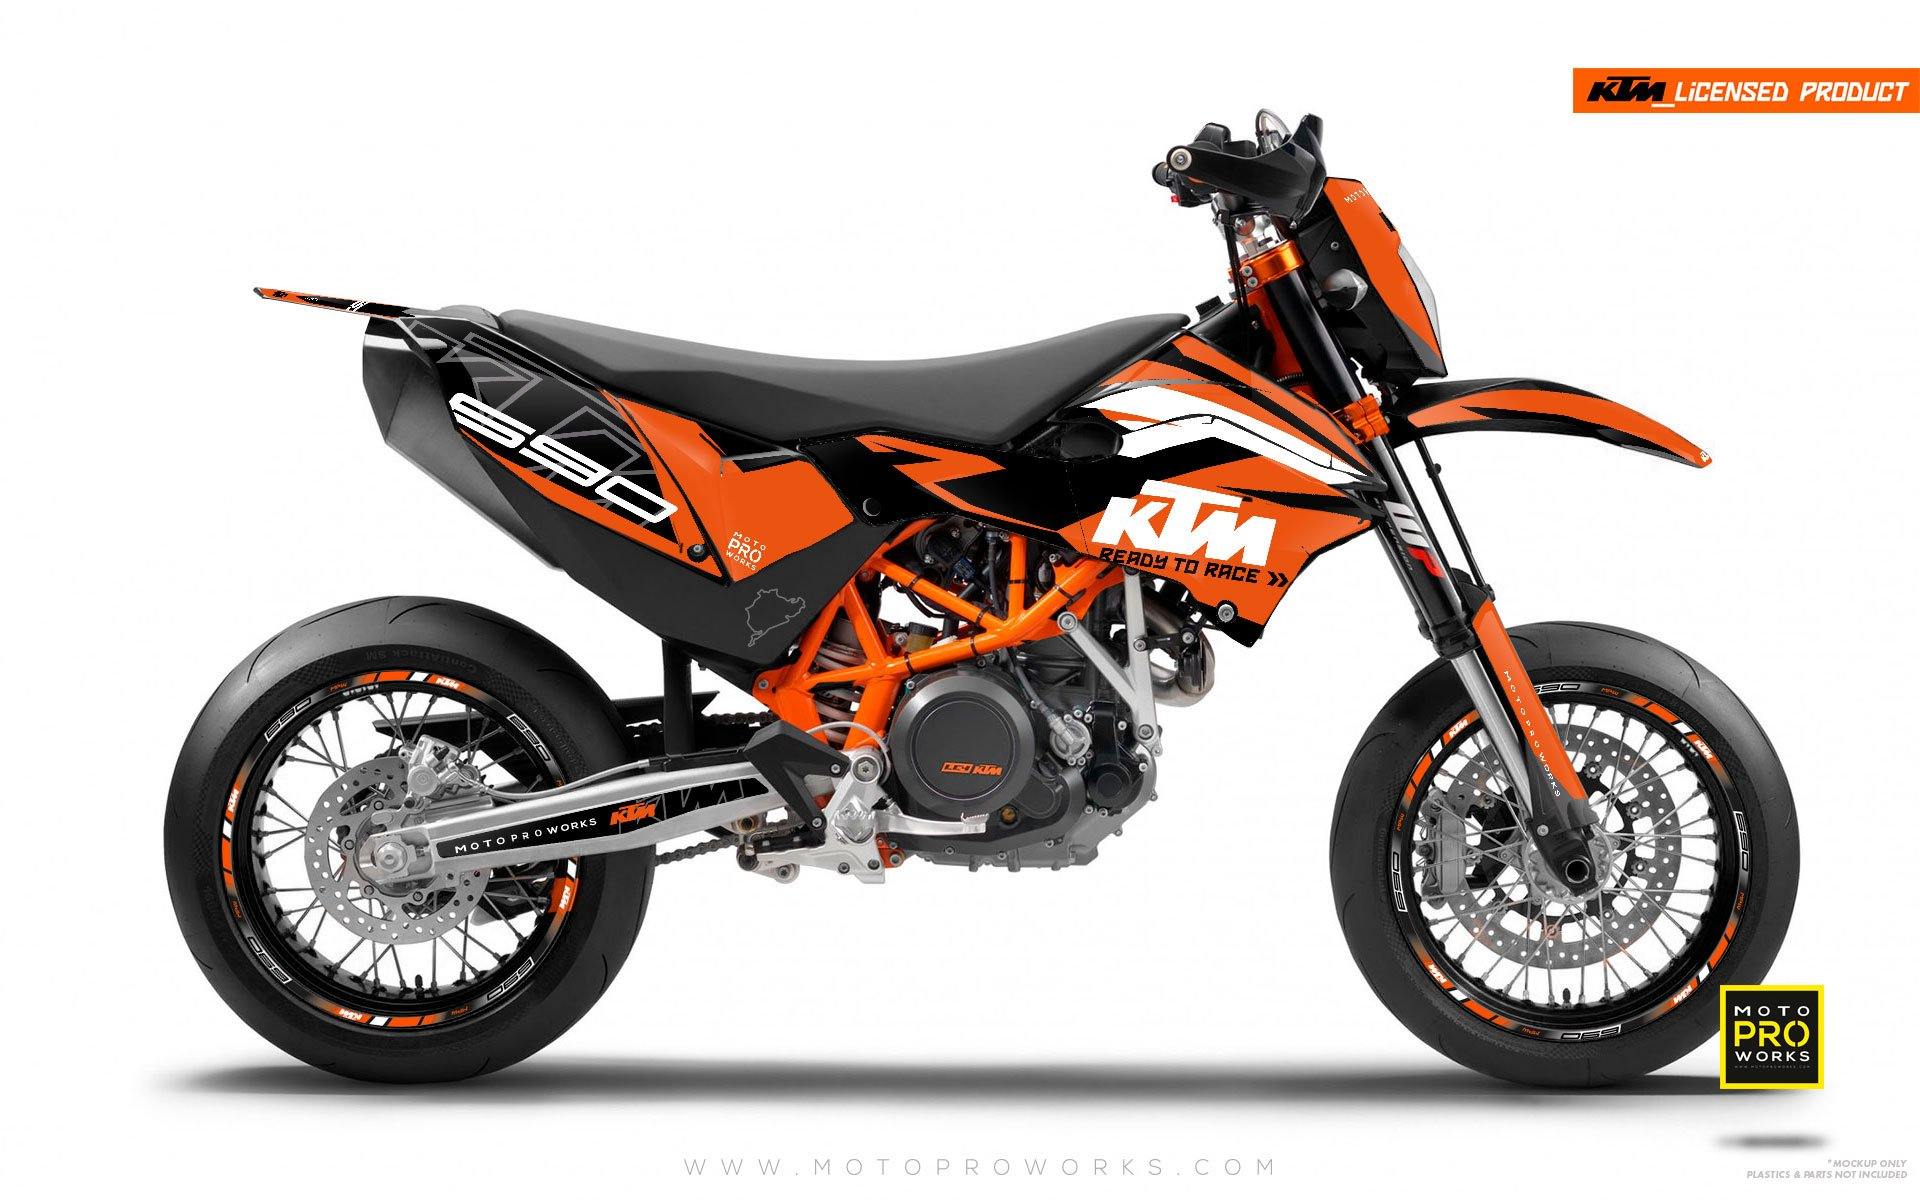 KTM GRAPHIC KIT - "ABSTRAKT" (orange/black) - MotoProWorks | Decals and Bike Graphic kit